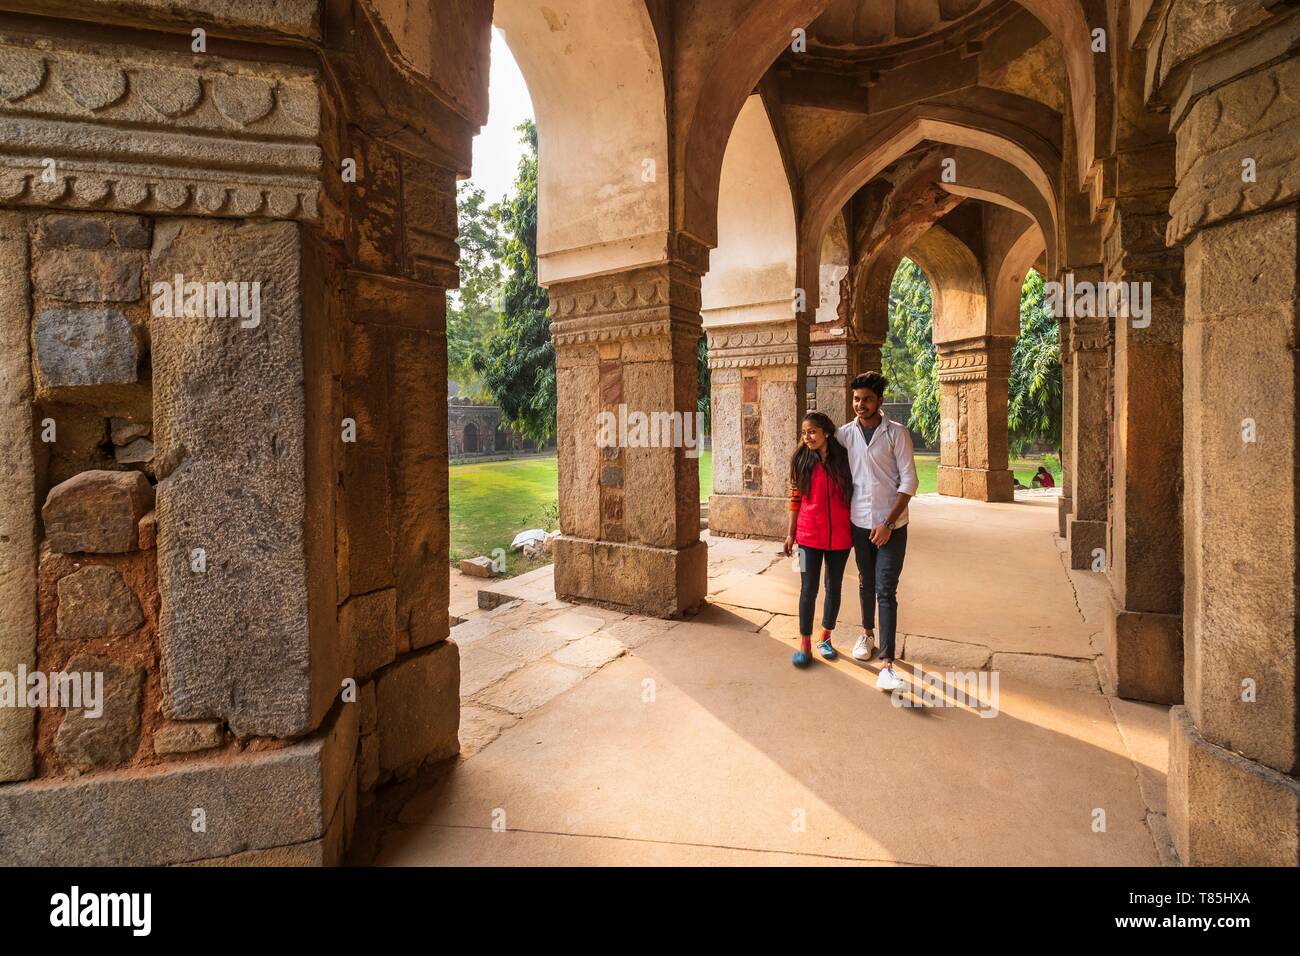 India, New Delhi, Lodi (or Lodhi) Gardens, tomb of Sikandar Lodi (16th century) Stock Photo